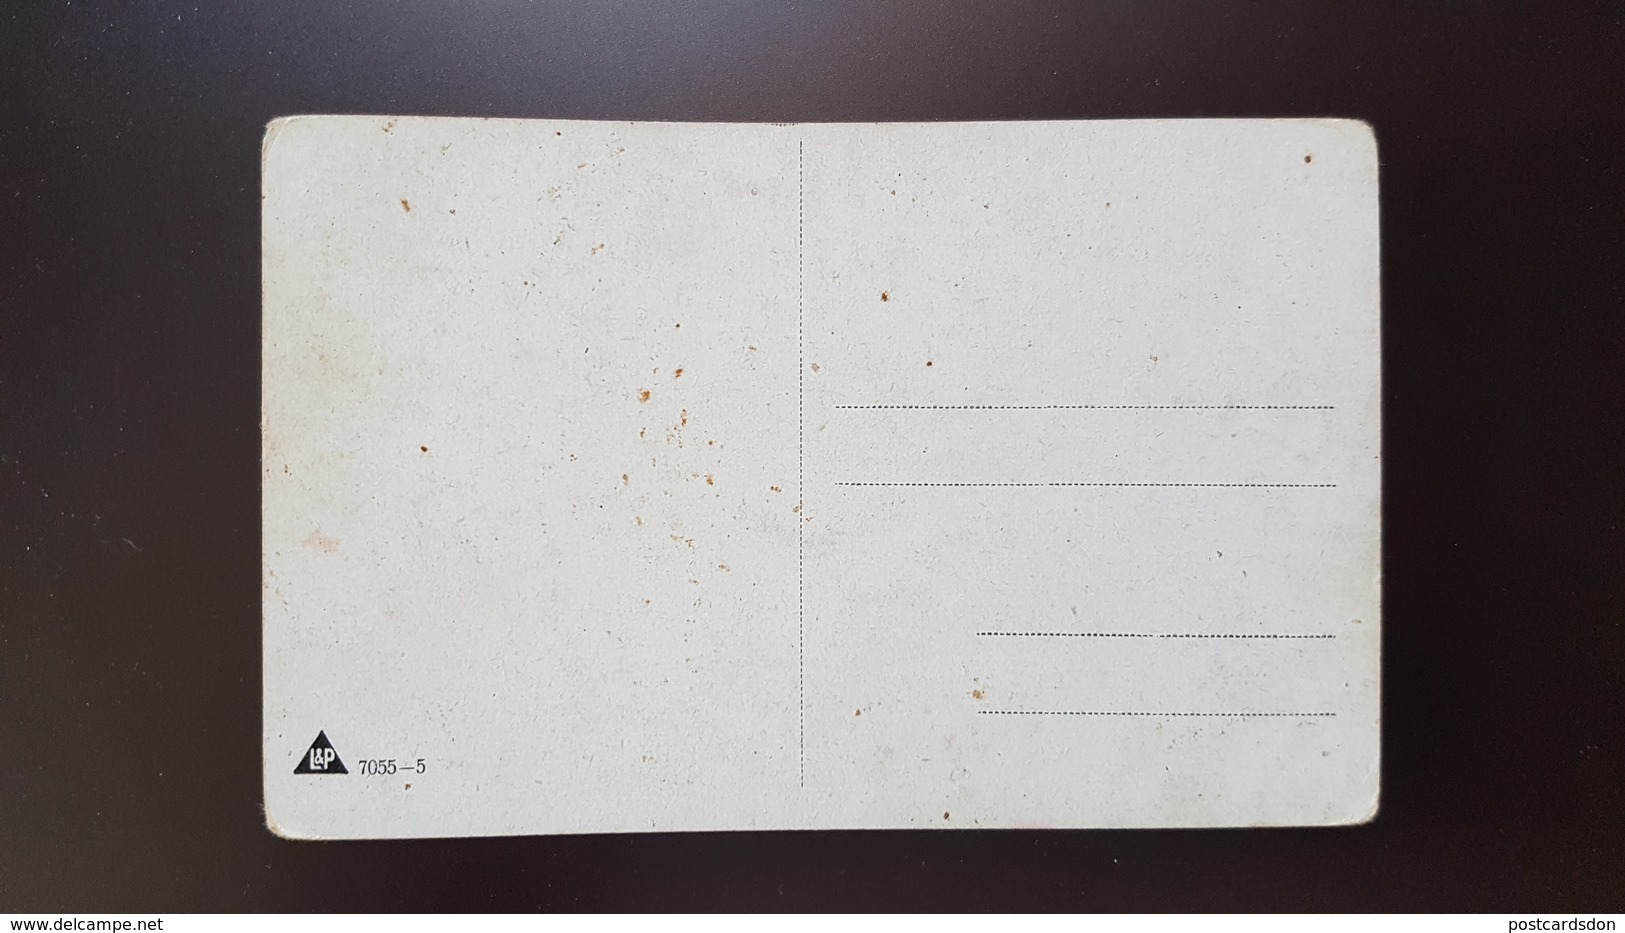 MULLER - Hunting Chasse - Black Grouse Bird - Old Vintage Postcard - Mueller, August - Munich